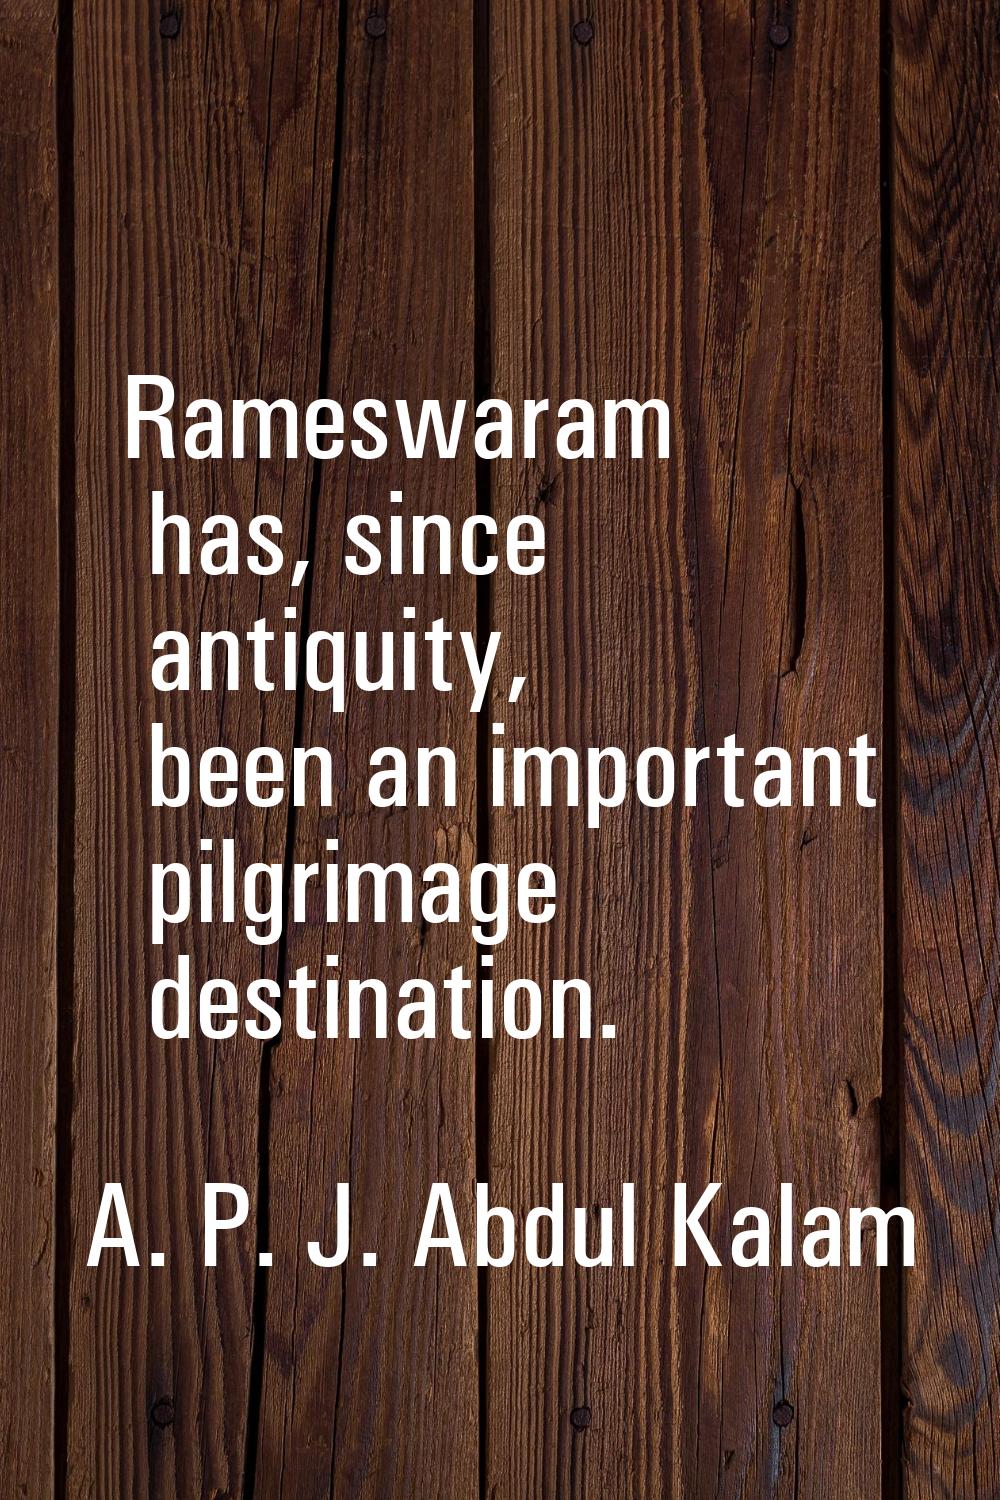 Rameswaram has, since antiquity, been an important pilgrimage destination.